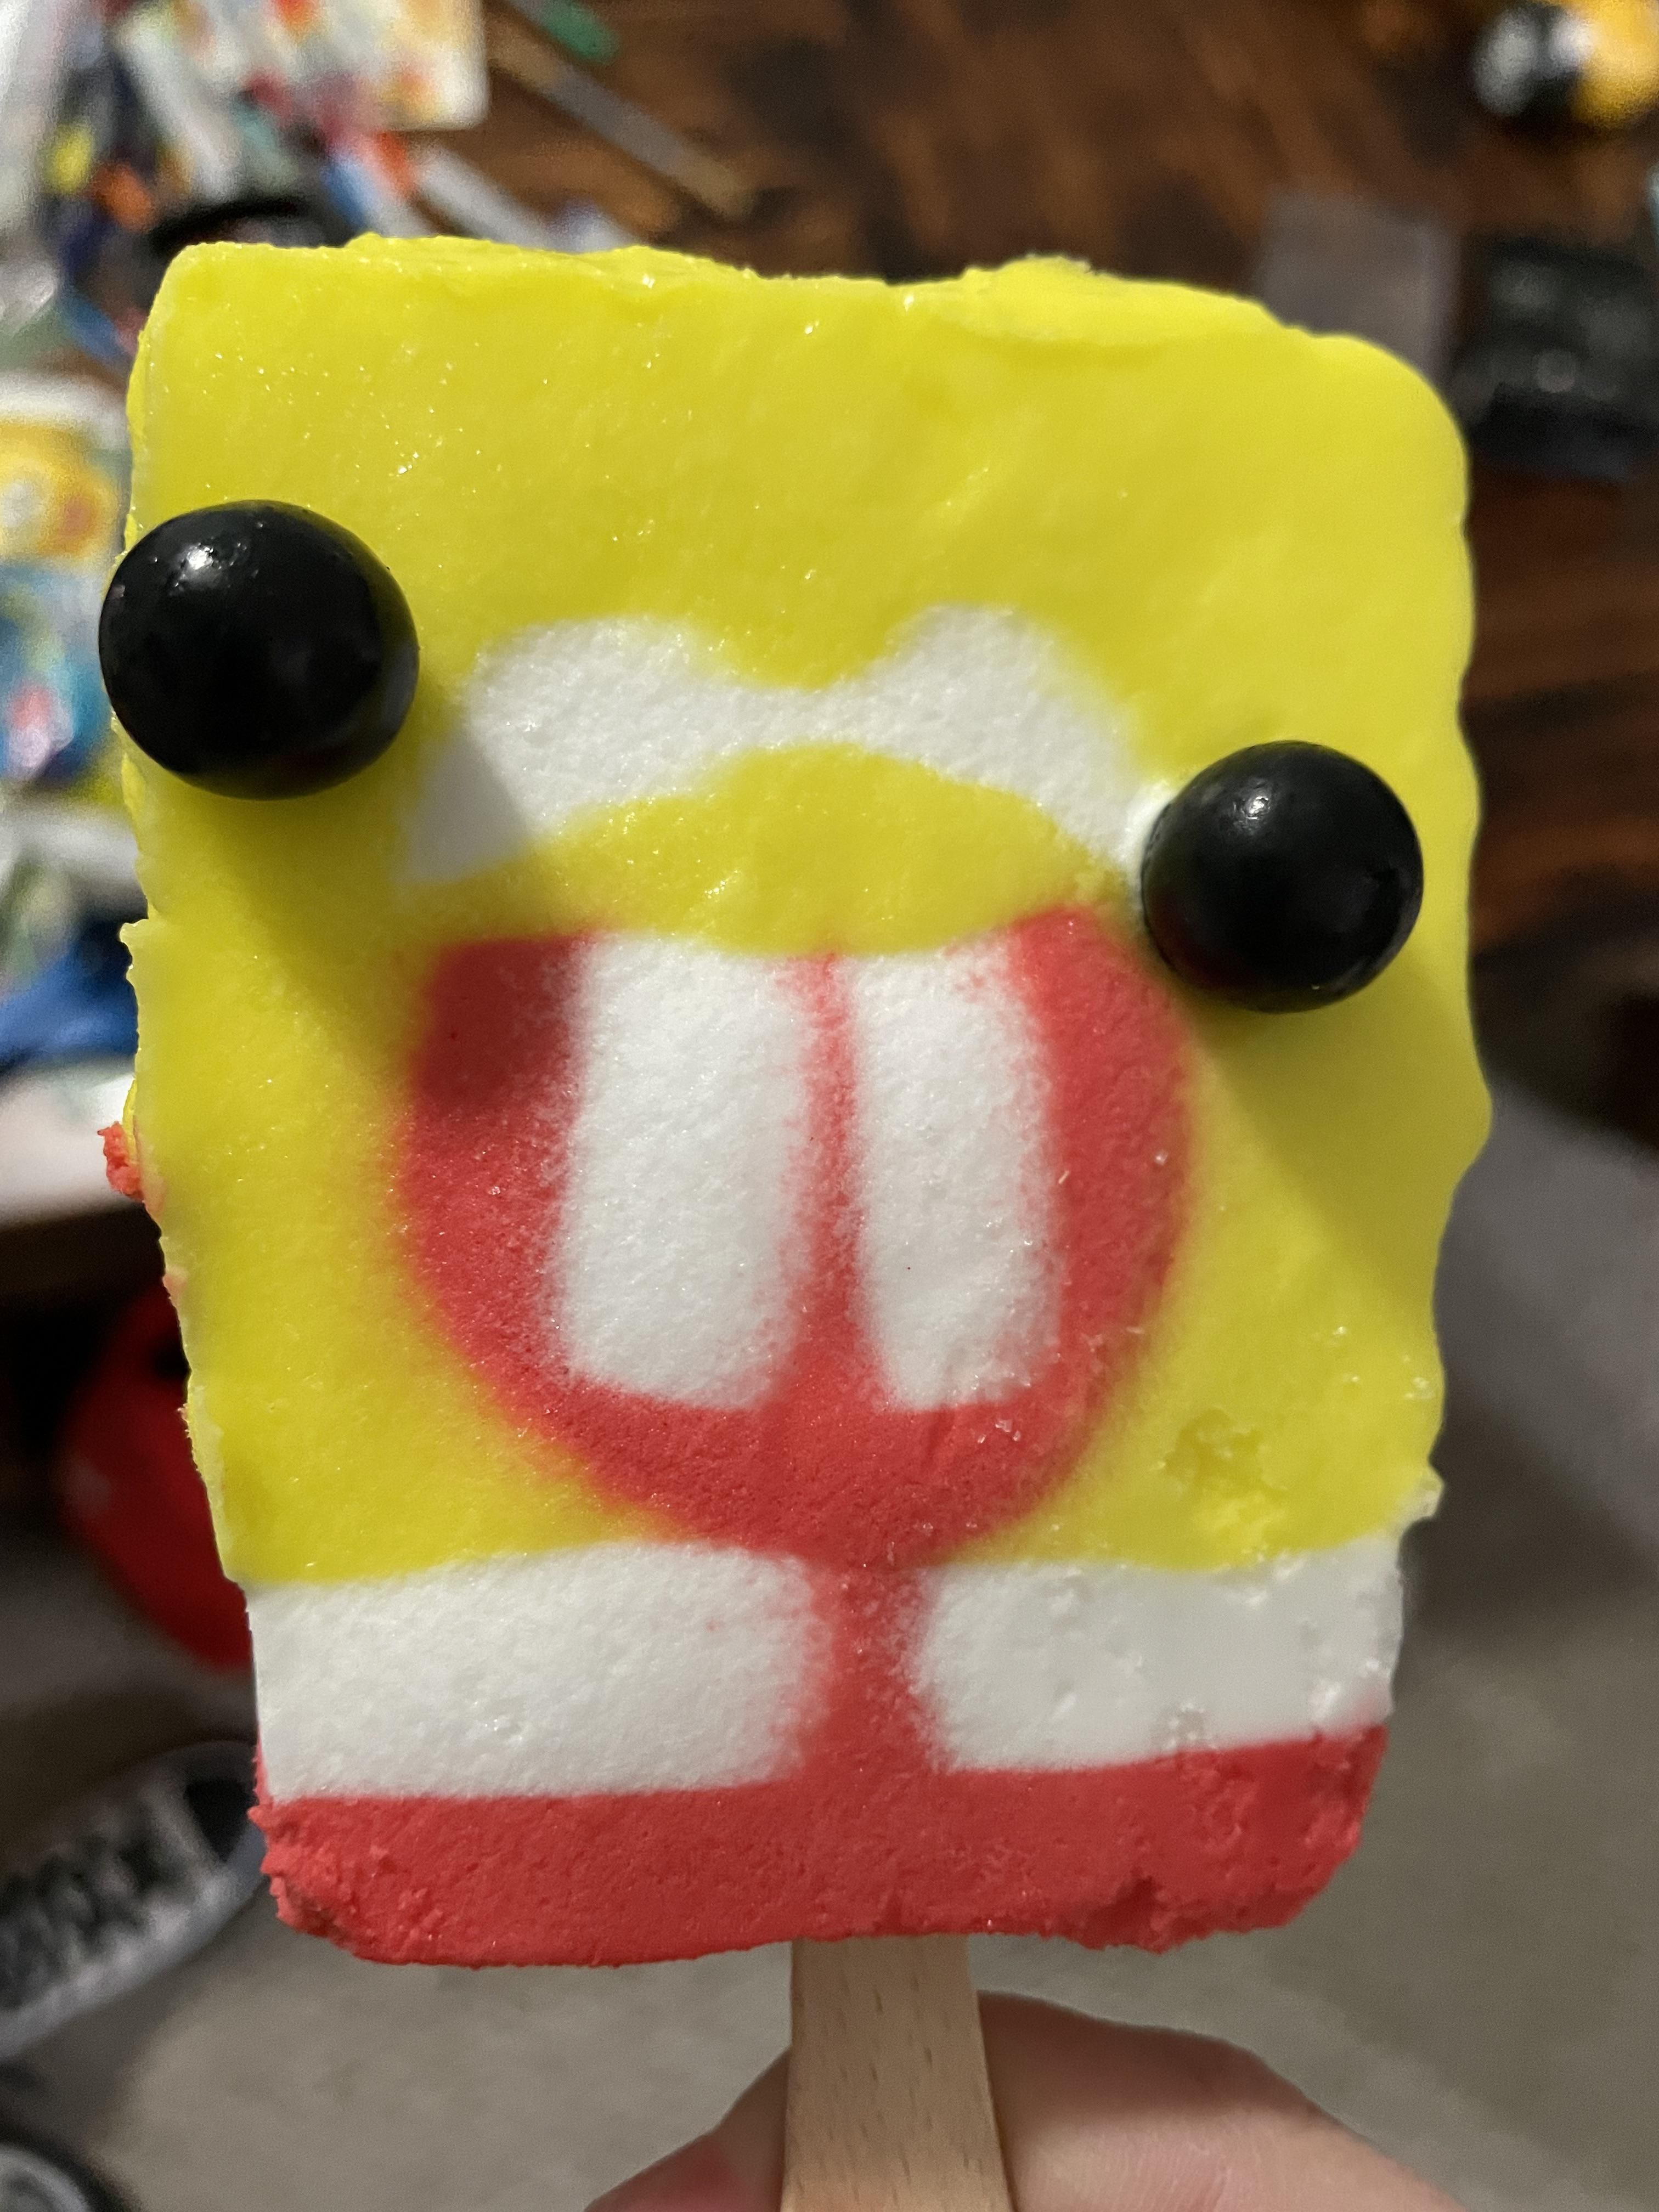 Worst SpongeBob popsicle I’ve gotten